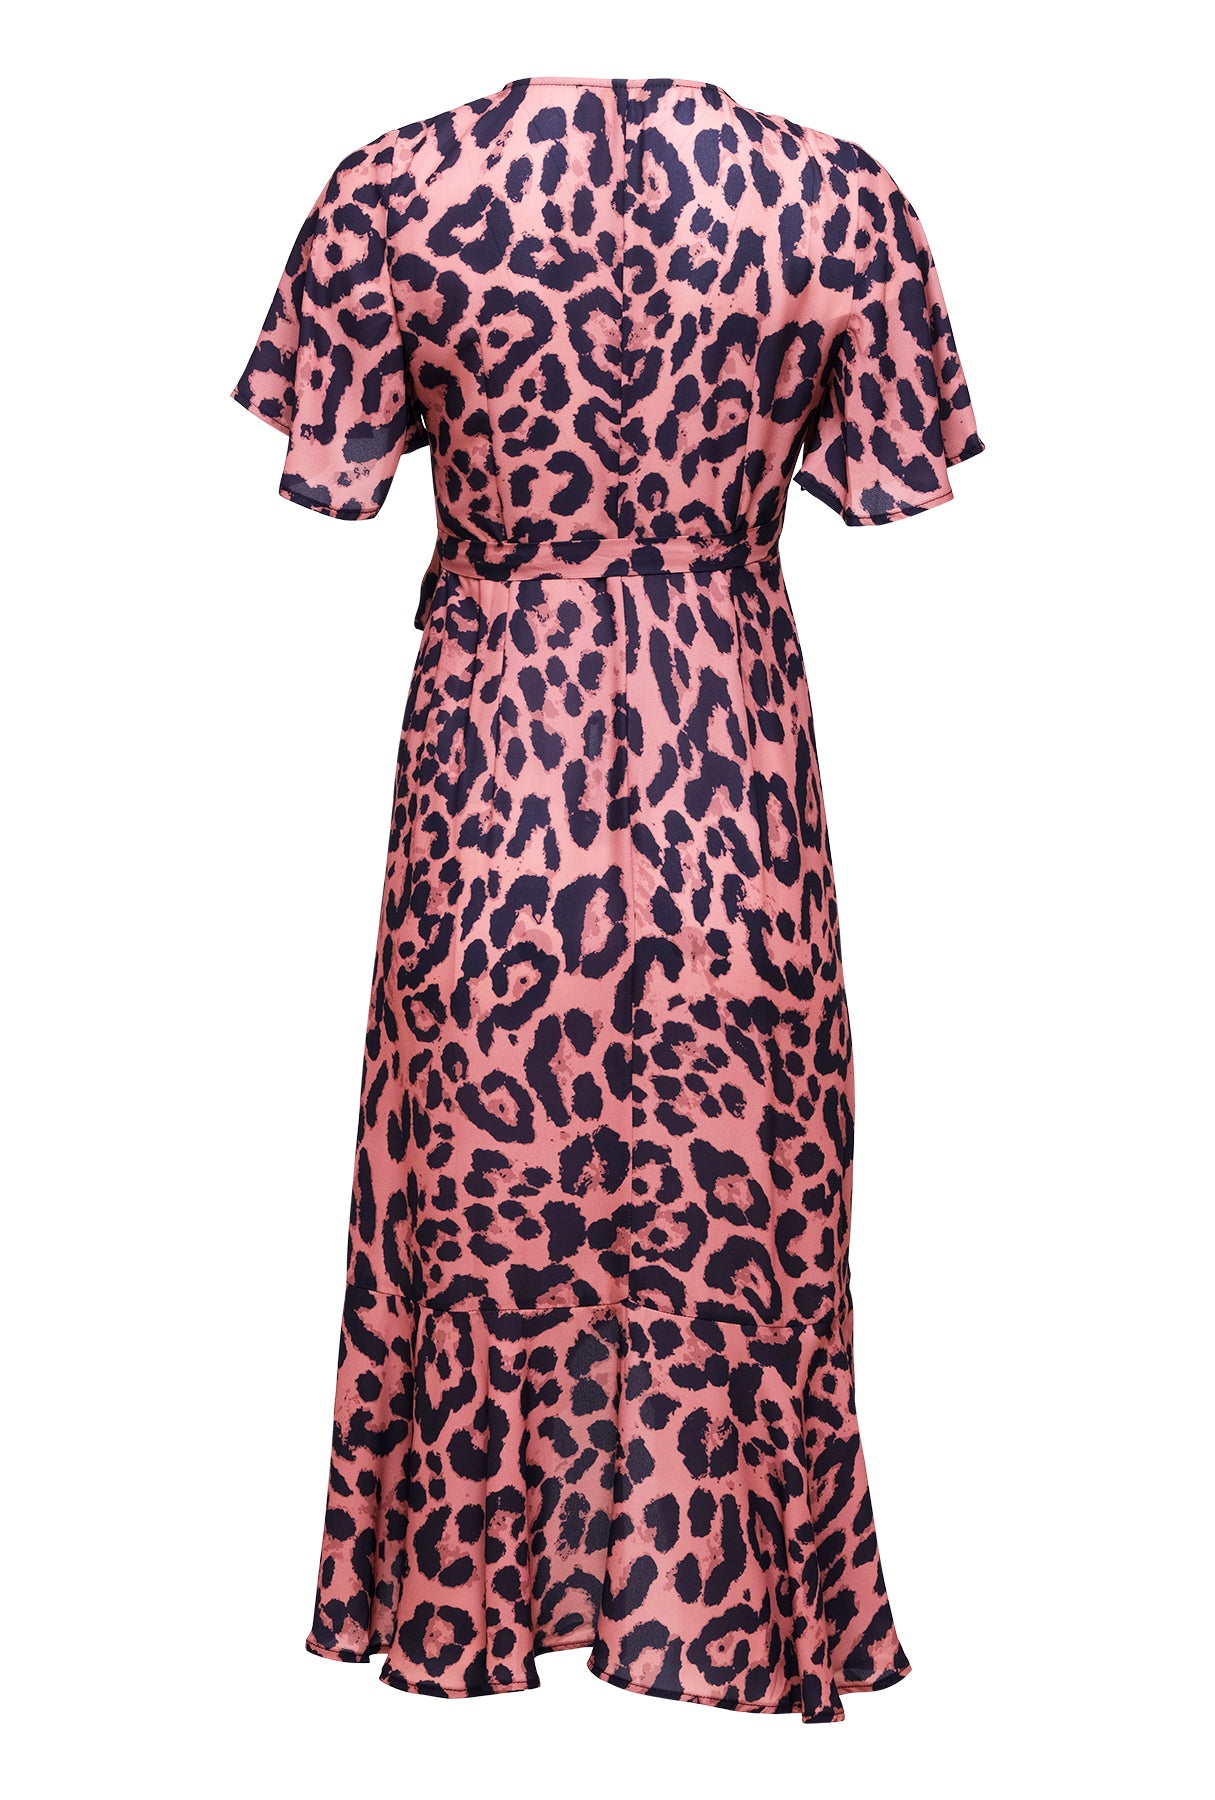 Kick Up Your Heels Wrap Dress - Leopard